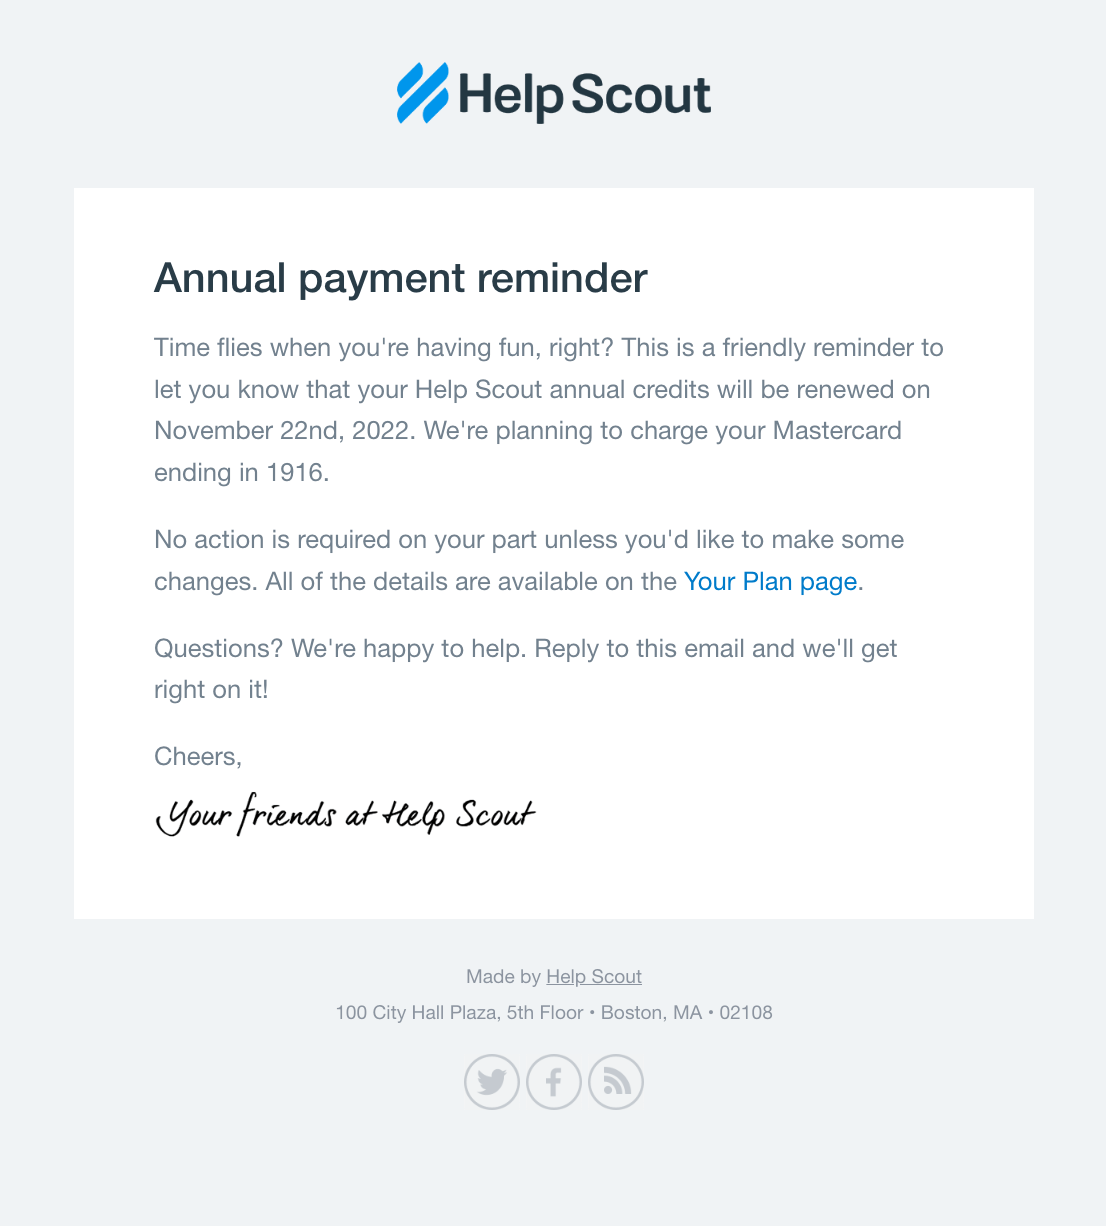 SaaS Renewal Email Examples: Help Scout's renewal email